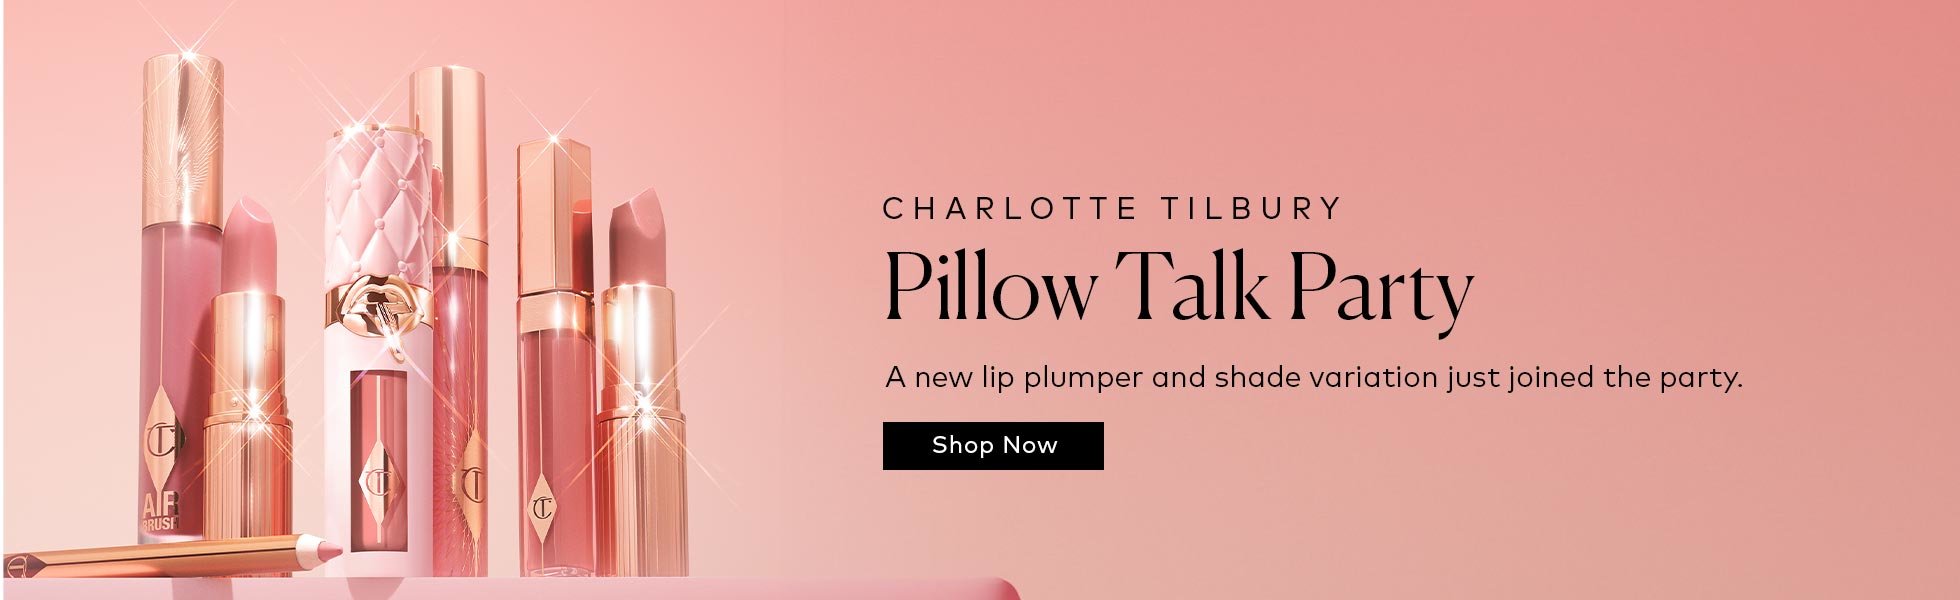 Shop the Charlotte Tilbury Pillow Talk Party at Beautylish.com